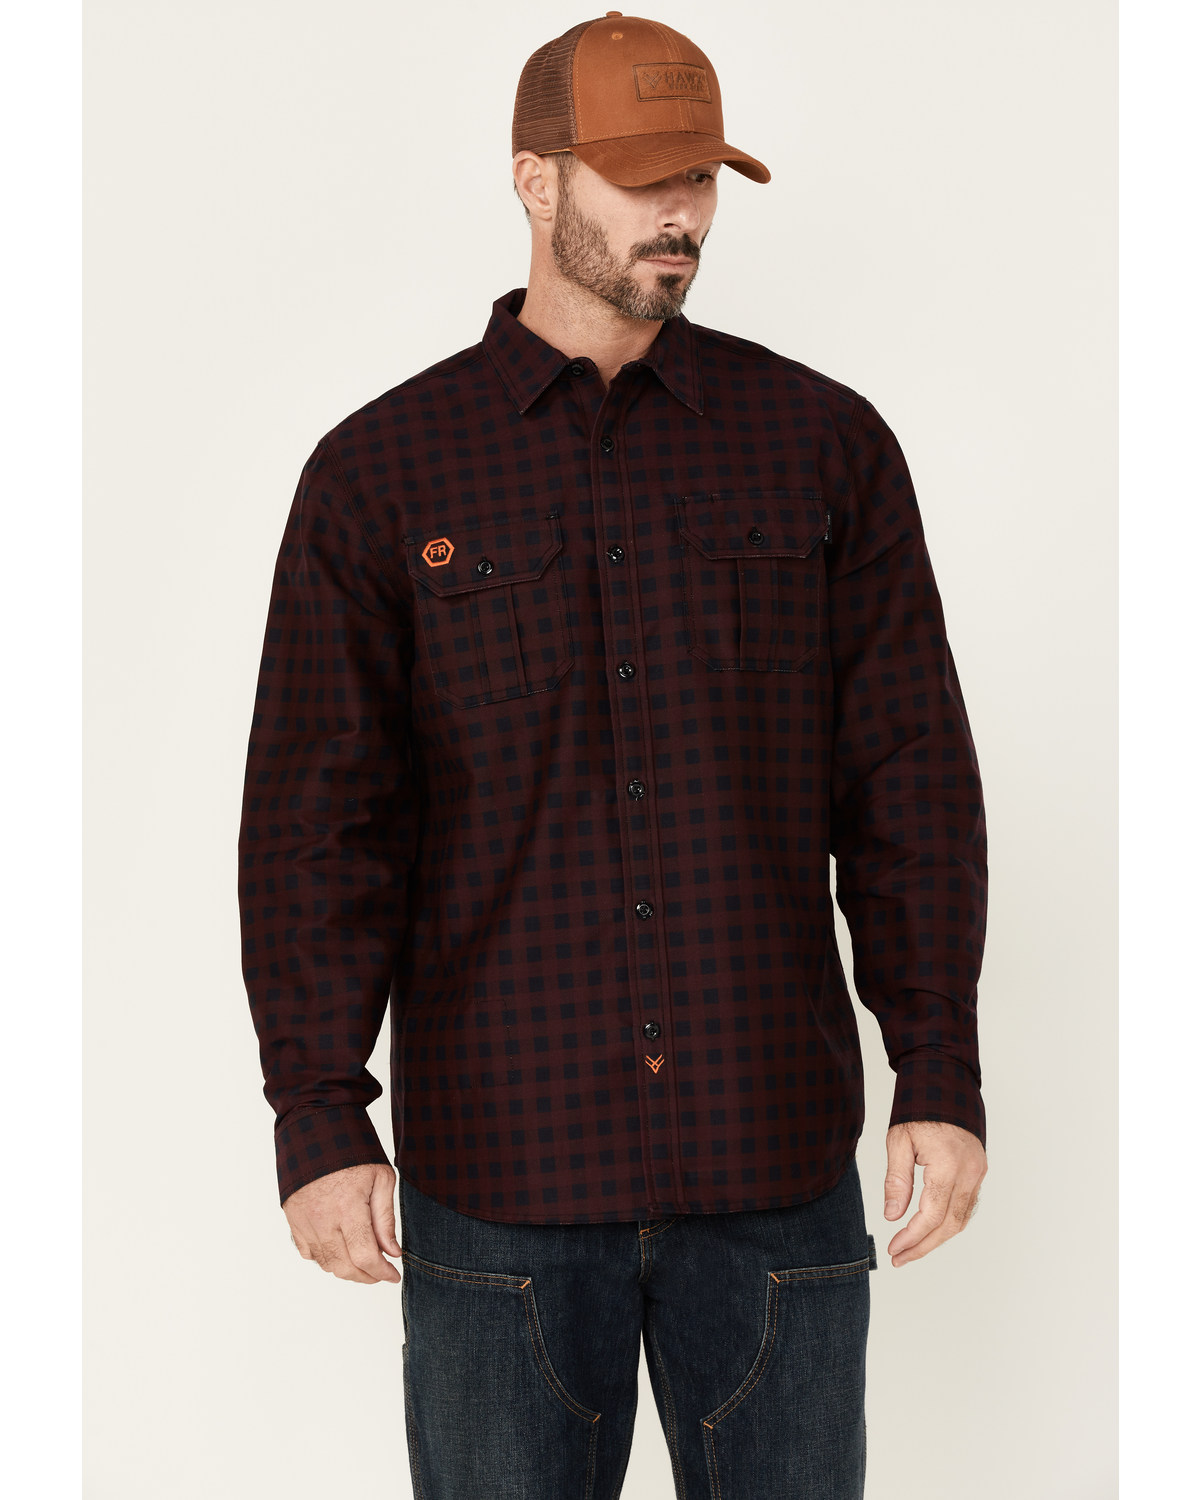 Hawx Men's FR Check Plaid Print Long Sleeve Button-Down Work Shirt